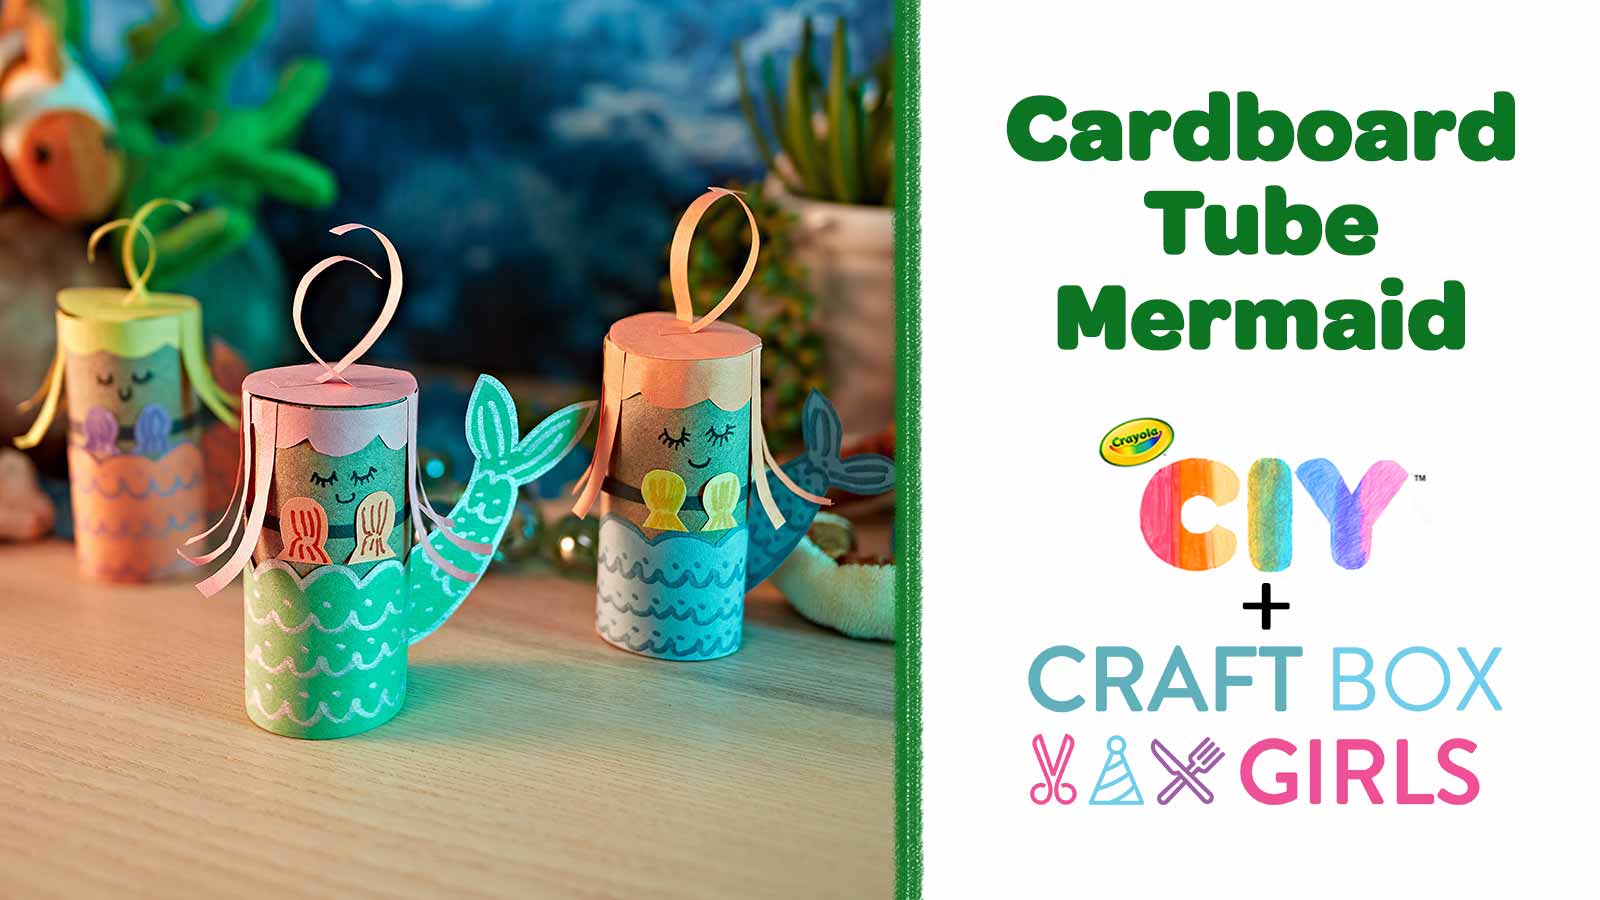 Cardboard Tube Mermaid Craft, Crafts, , Crayola CIY, DIY  Crafts for Kids and Adults